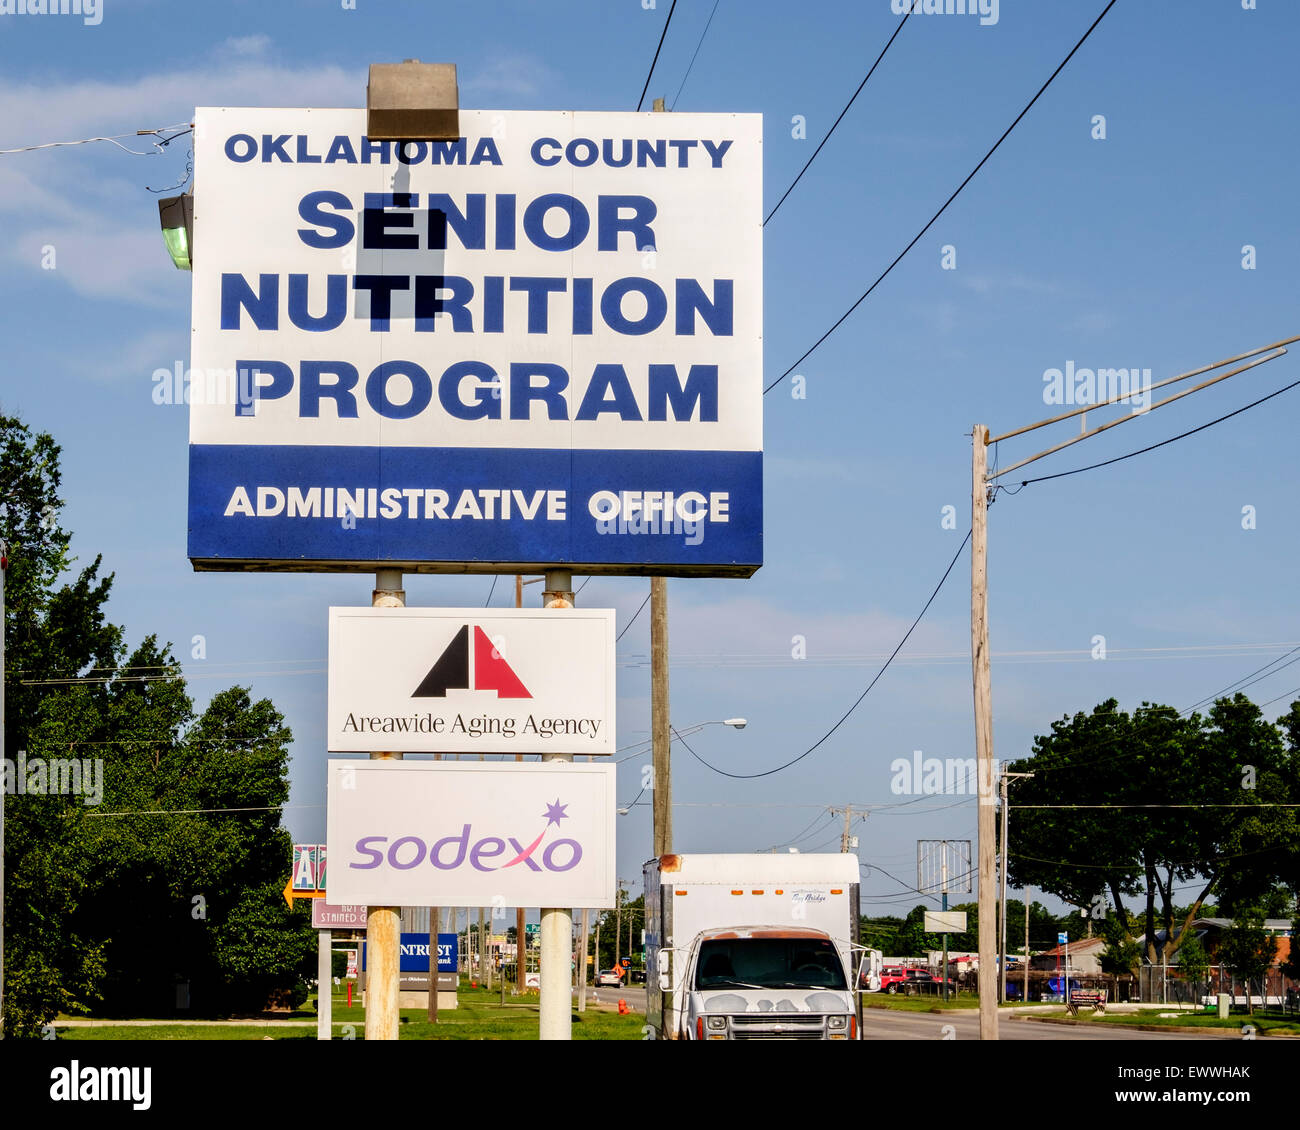 a pole sign advertising Oklahoma County Senior Nutrition Program in Oklahoma City, Oklahoma, USA. Stock Photo